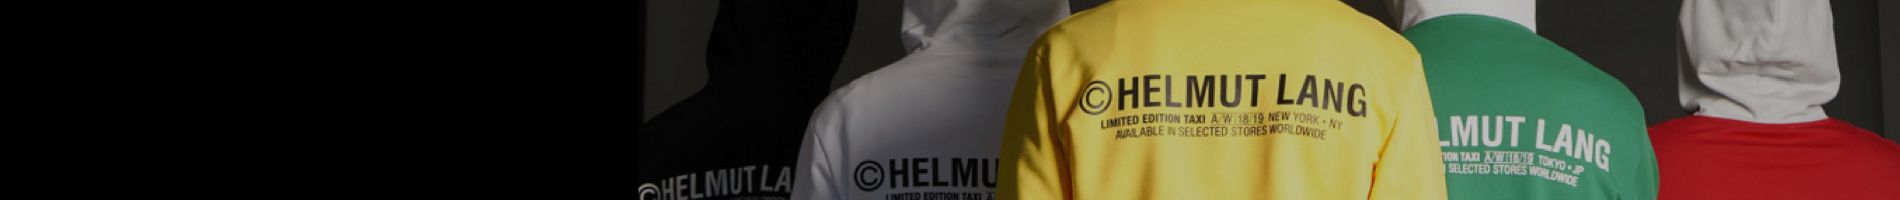 Helmut Lang Men's Long Sleeve T Shirts Banner